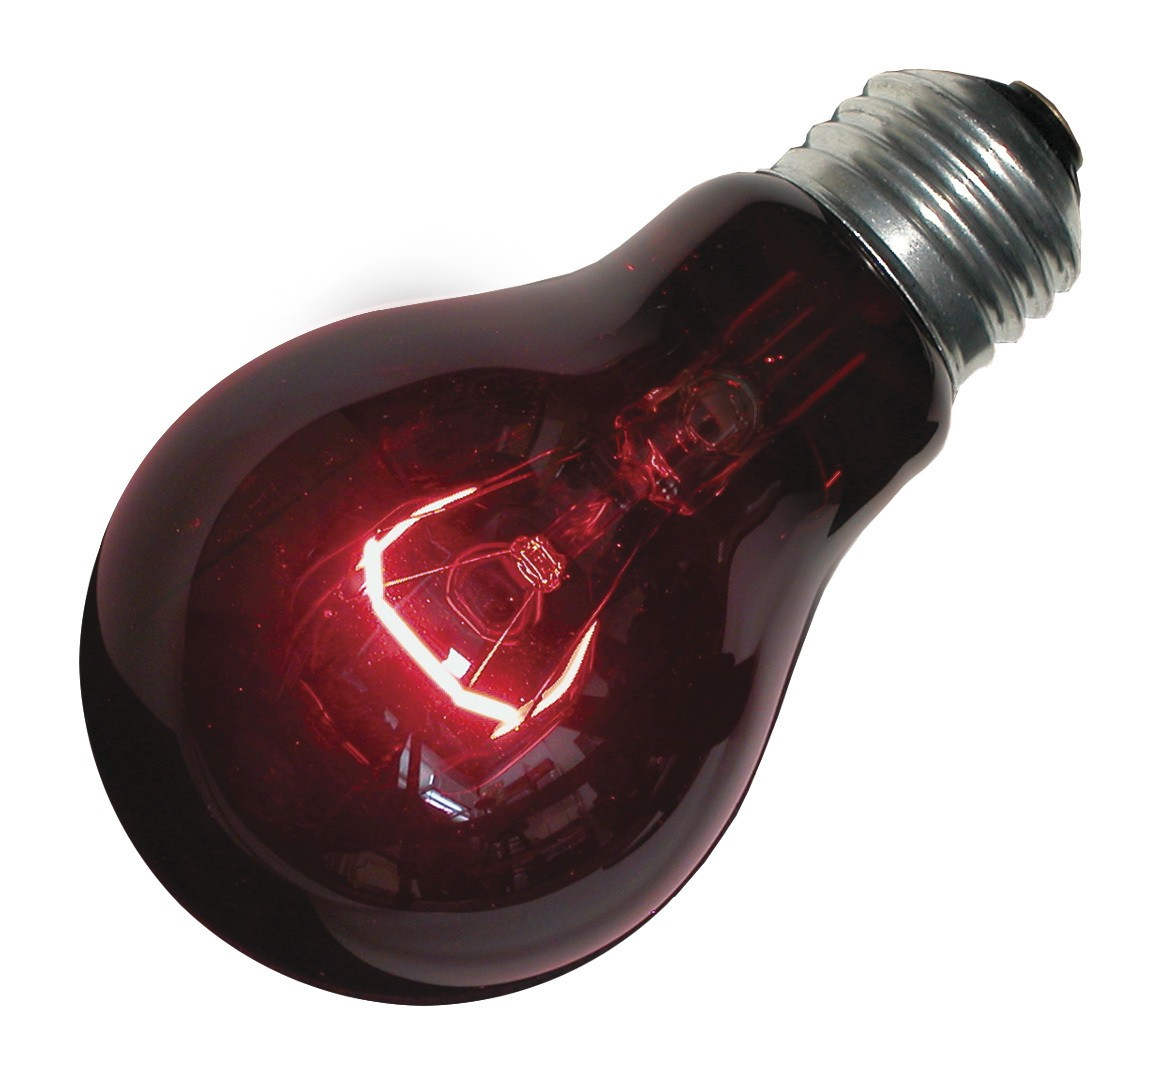 LAMPE INFRAROUGE ECONOMIQUE kerbl 175W rouge